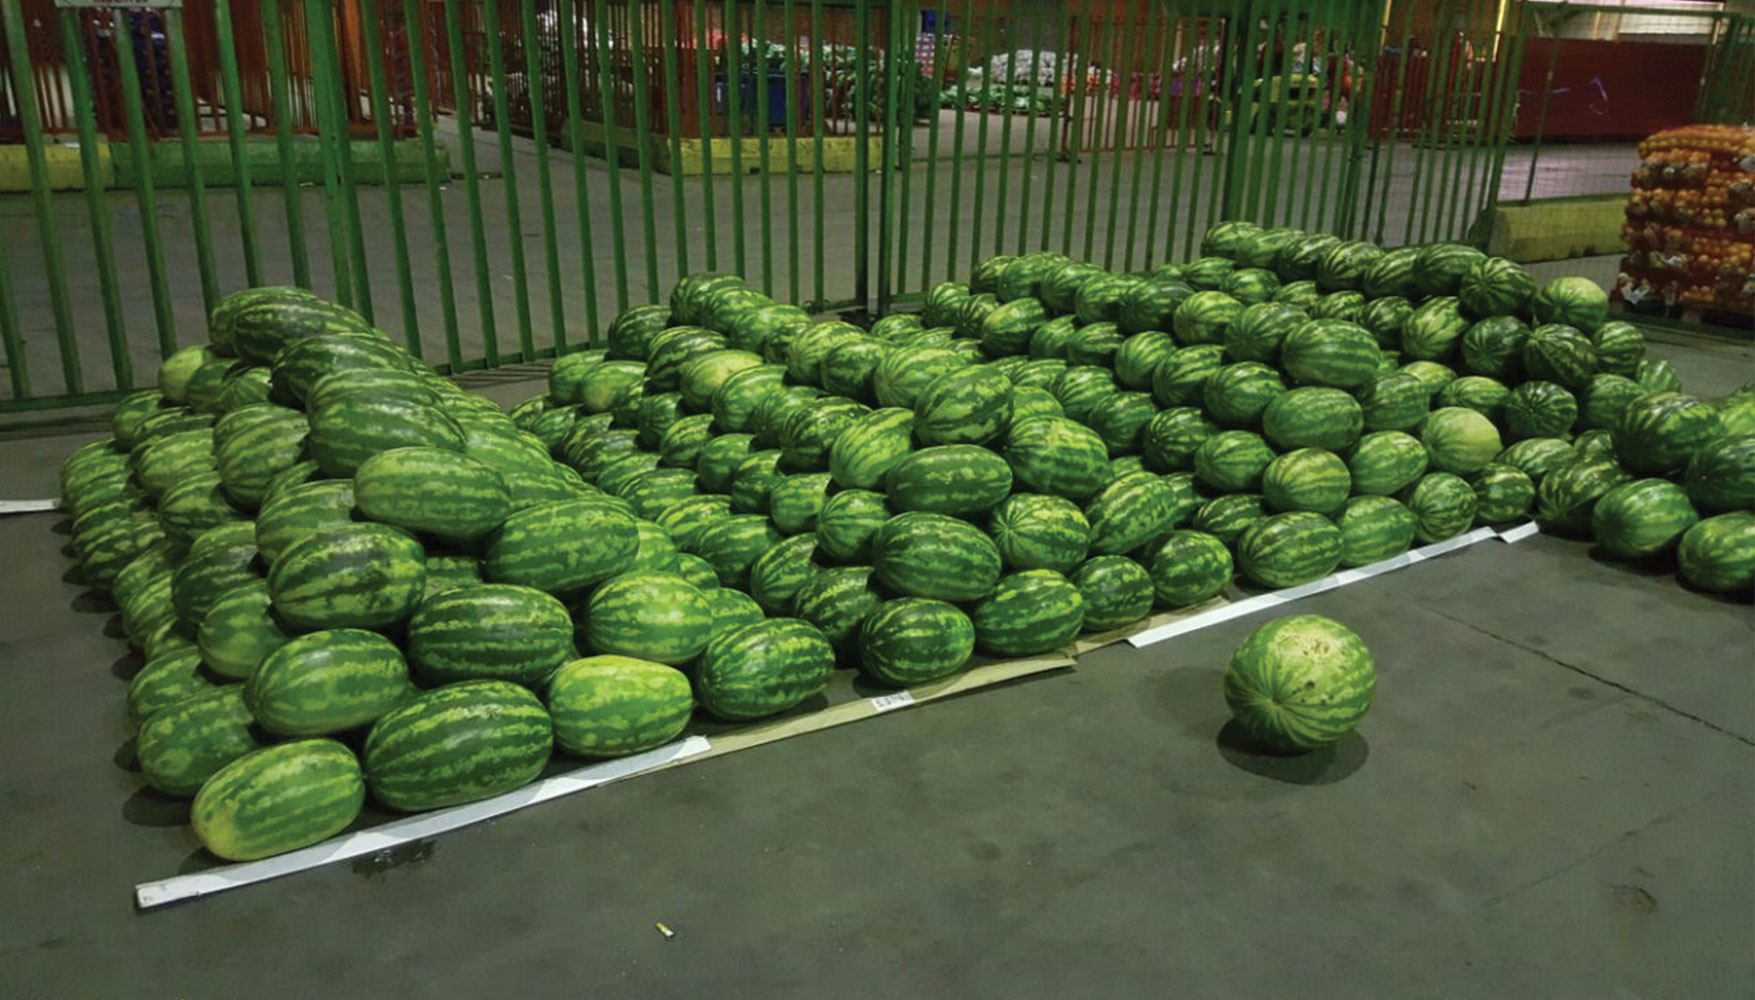 watermelon 1